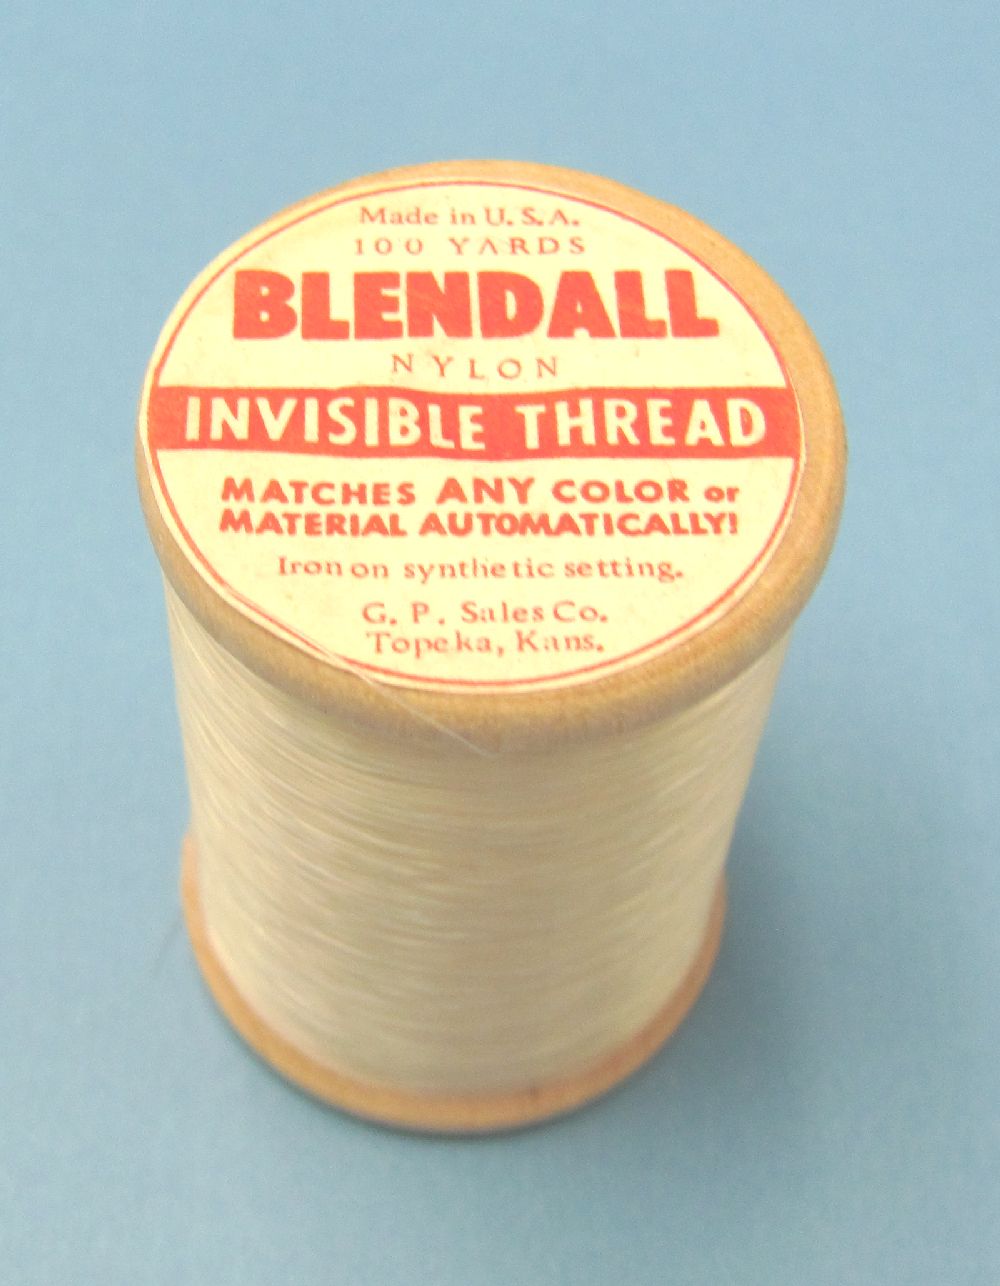 Blendall Invisible Nylon Thread on Spool